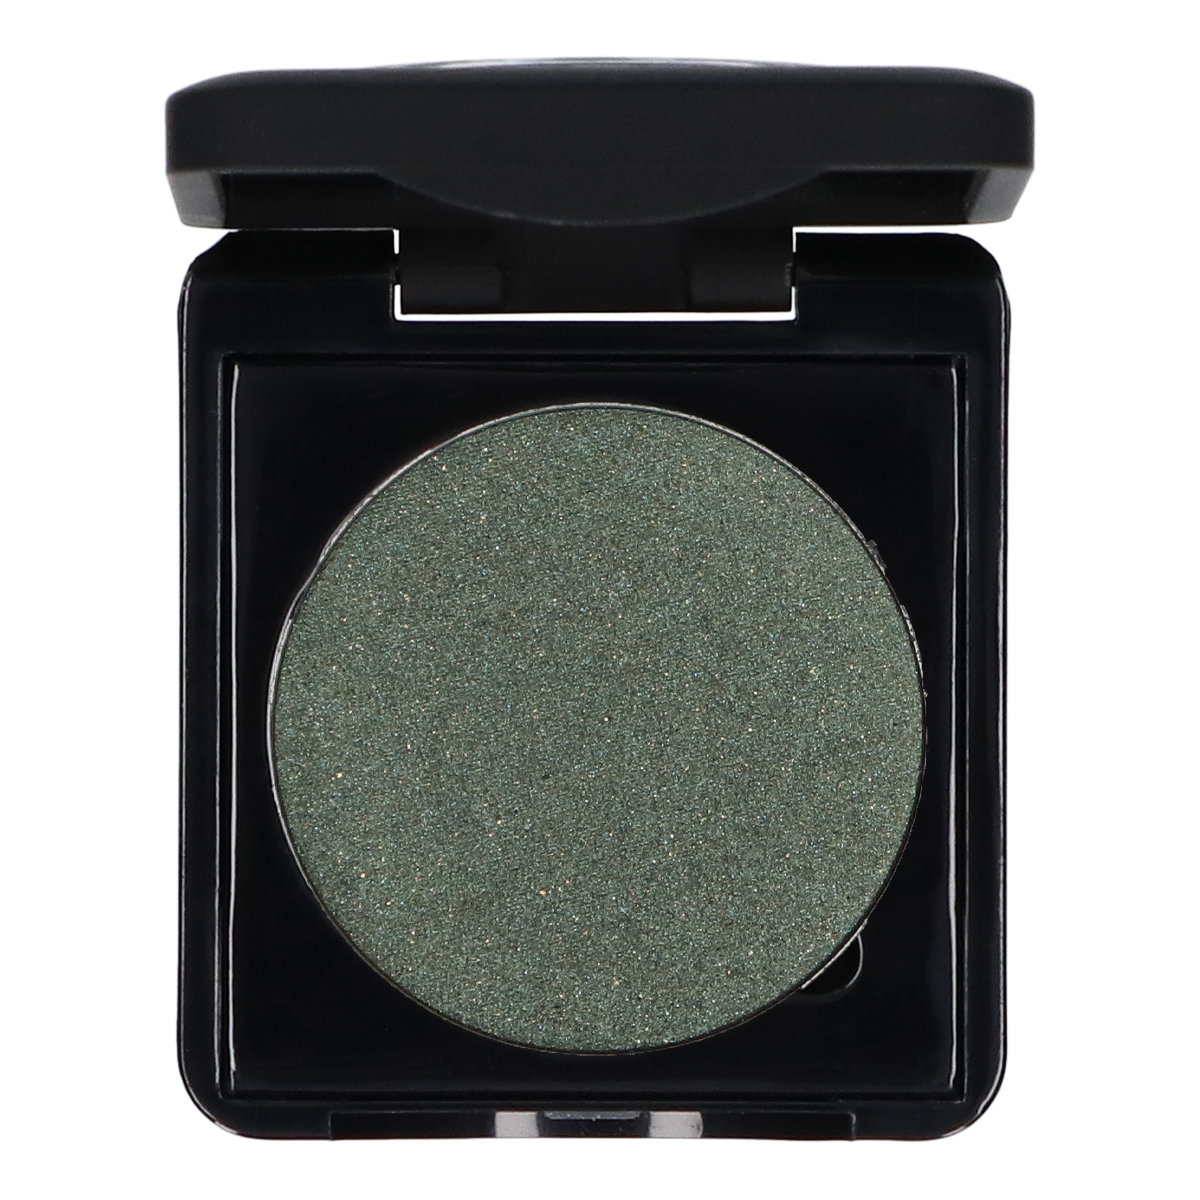 Make-up Studio Eyeshadow Super Frost - Stunning Green